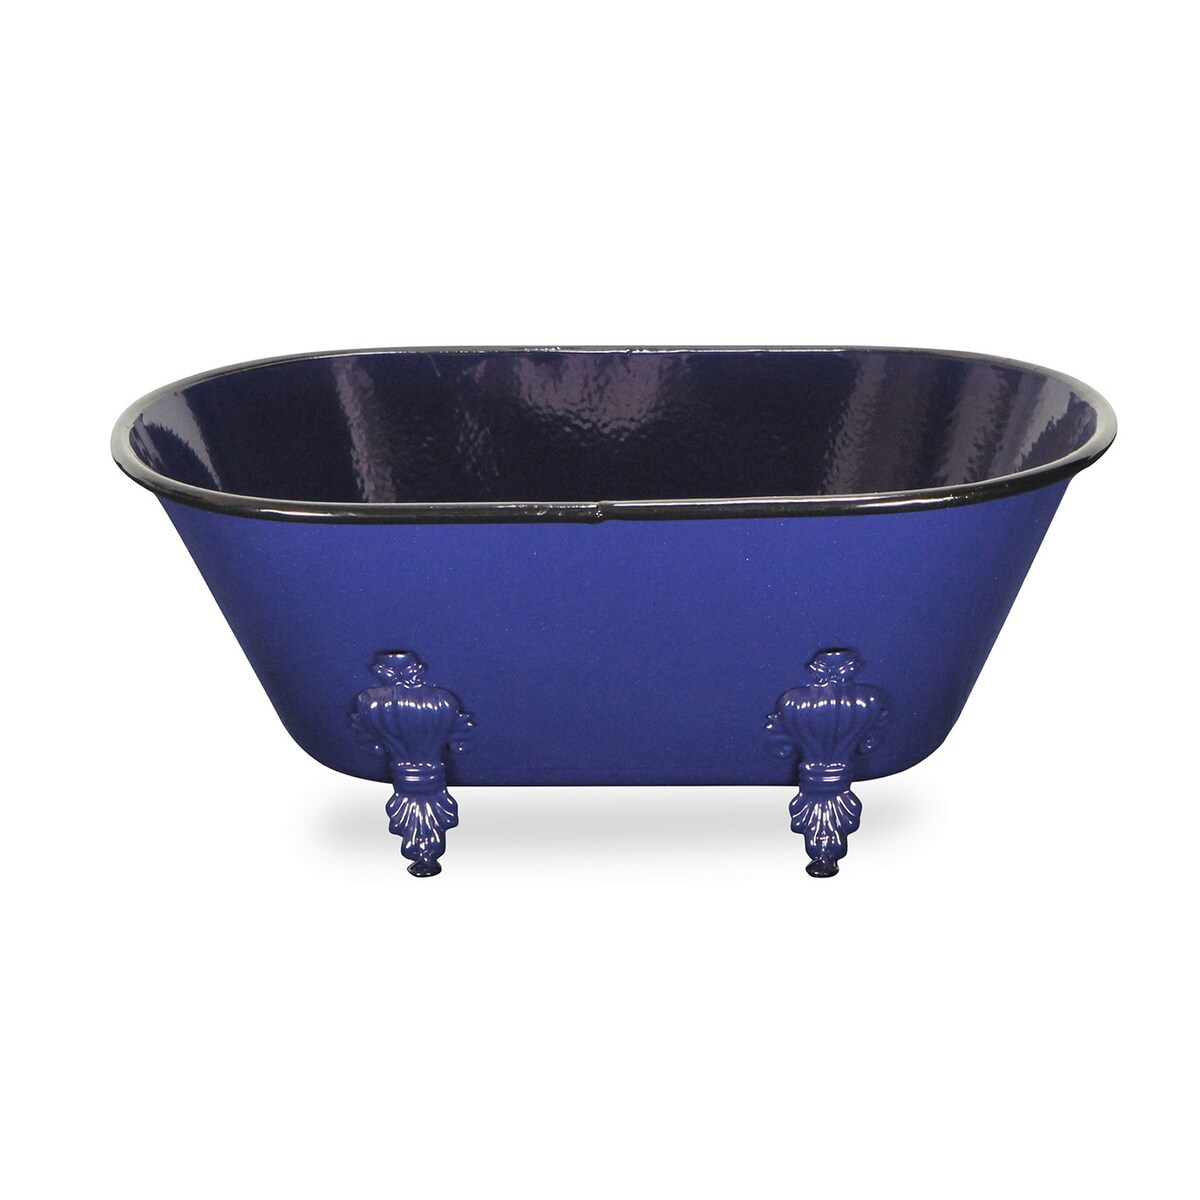 Cheung's Handmade Navy Blue Metal Bathtub Decor - 5"H